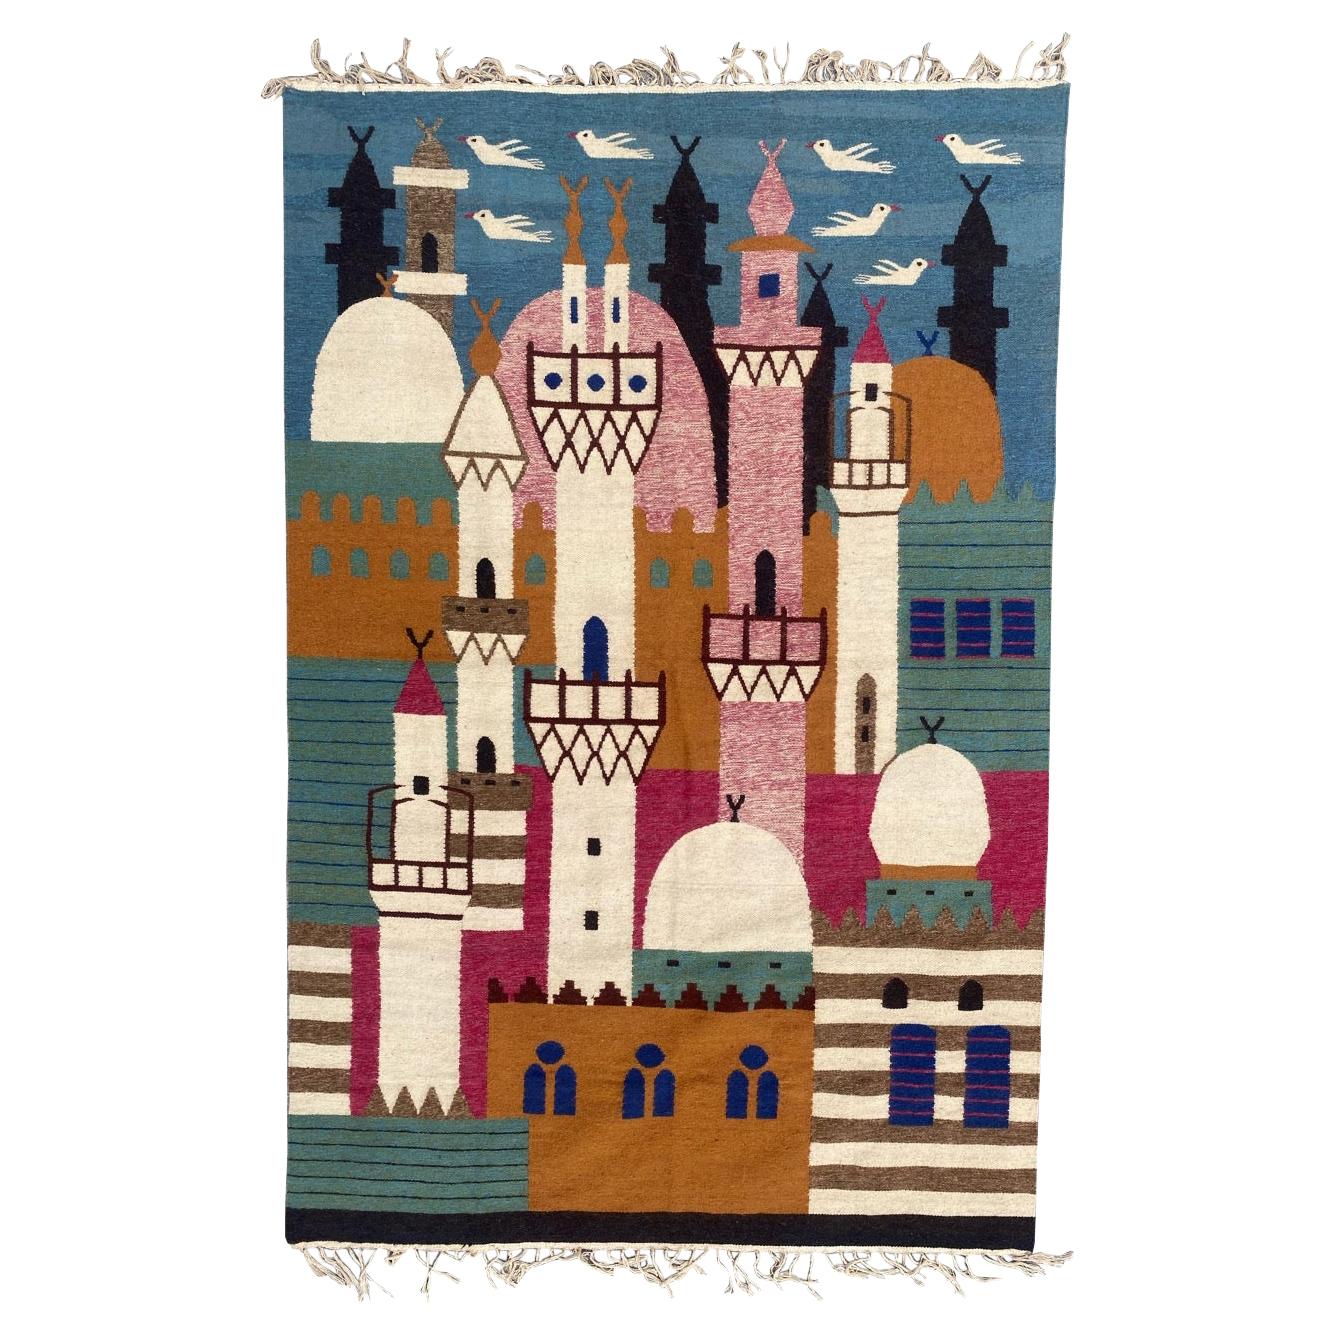 Bobyrug’s Wonderful vintage Egyptian Tapestry